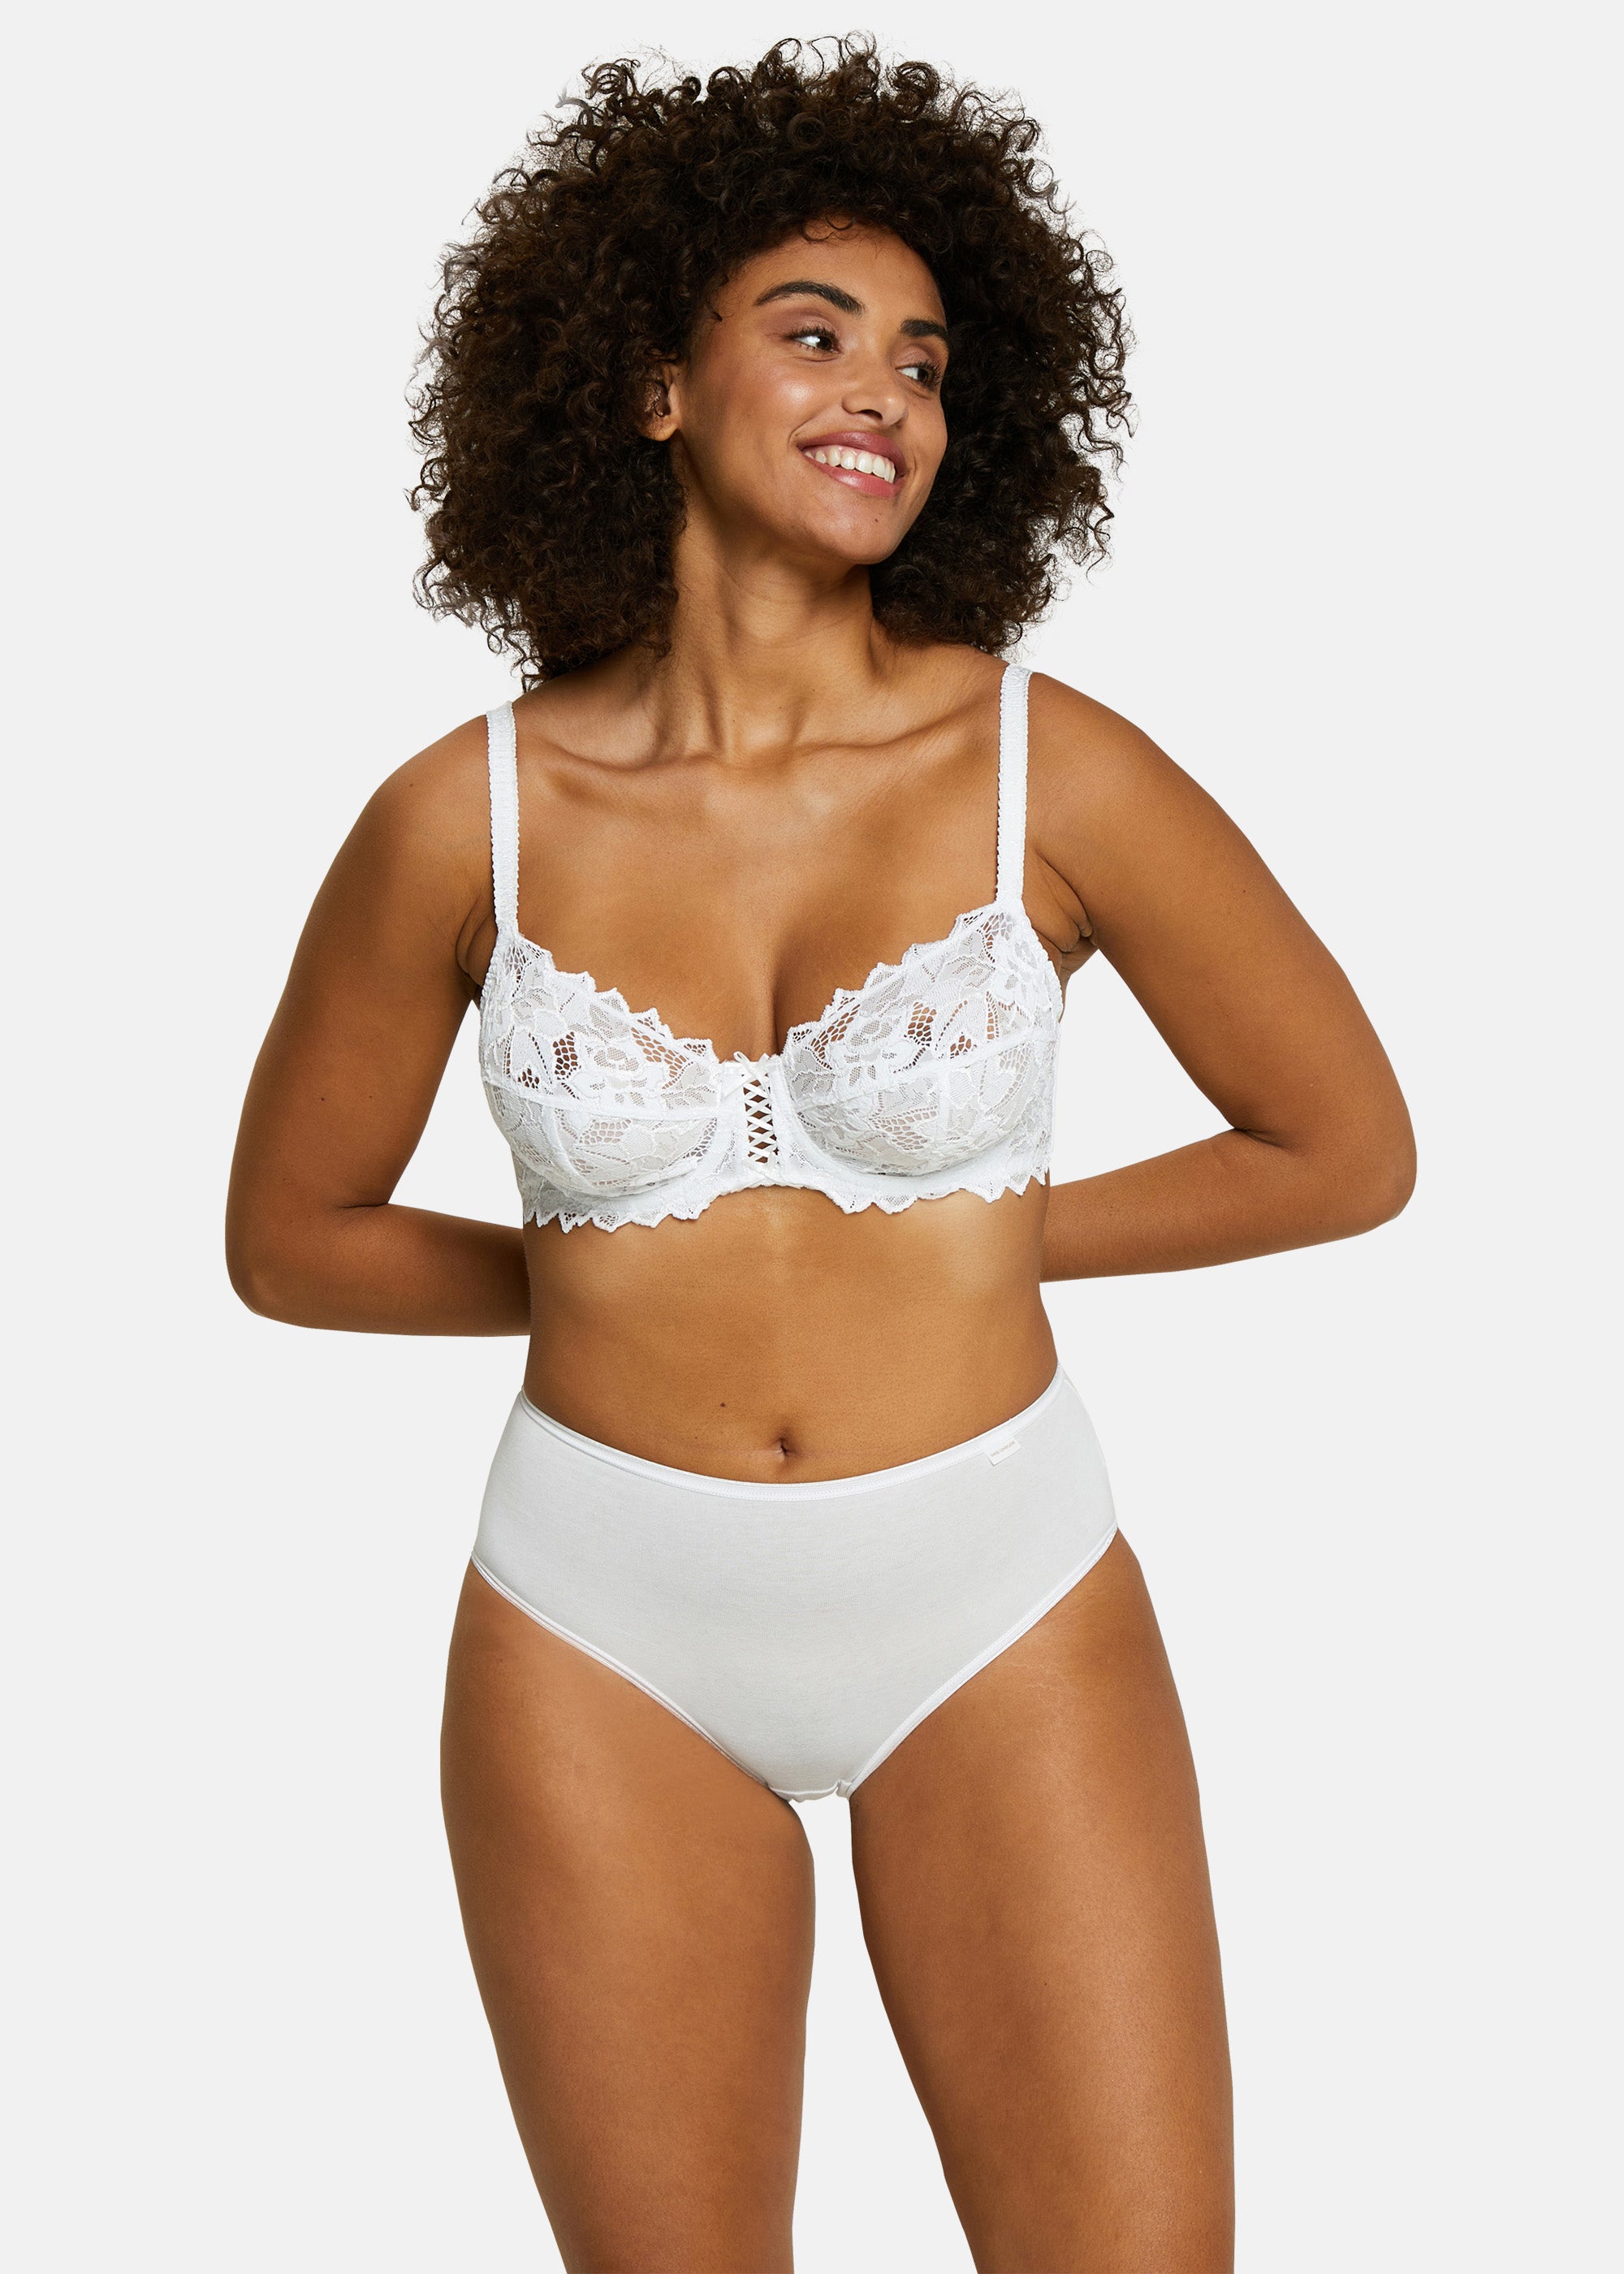 Formas Intimas, 612574, Women's Underwear, White